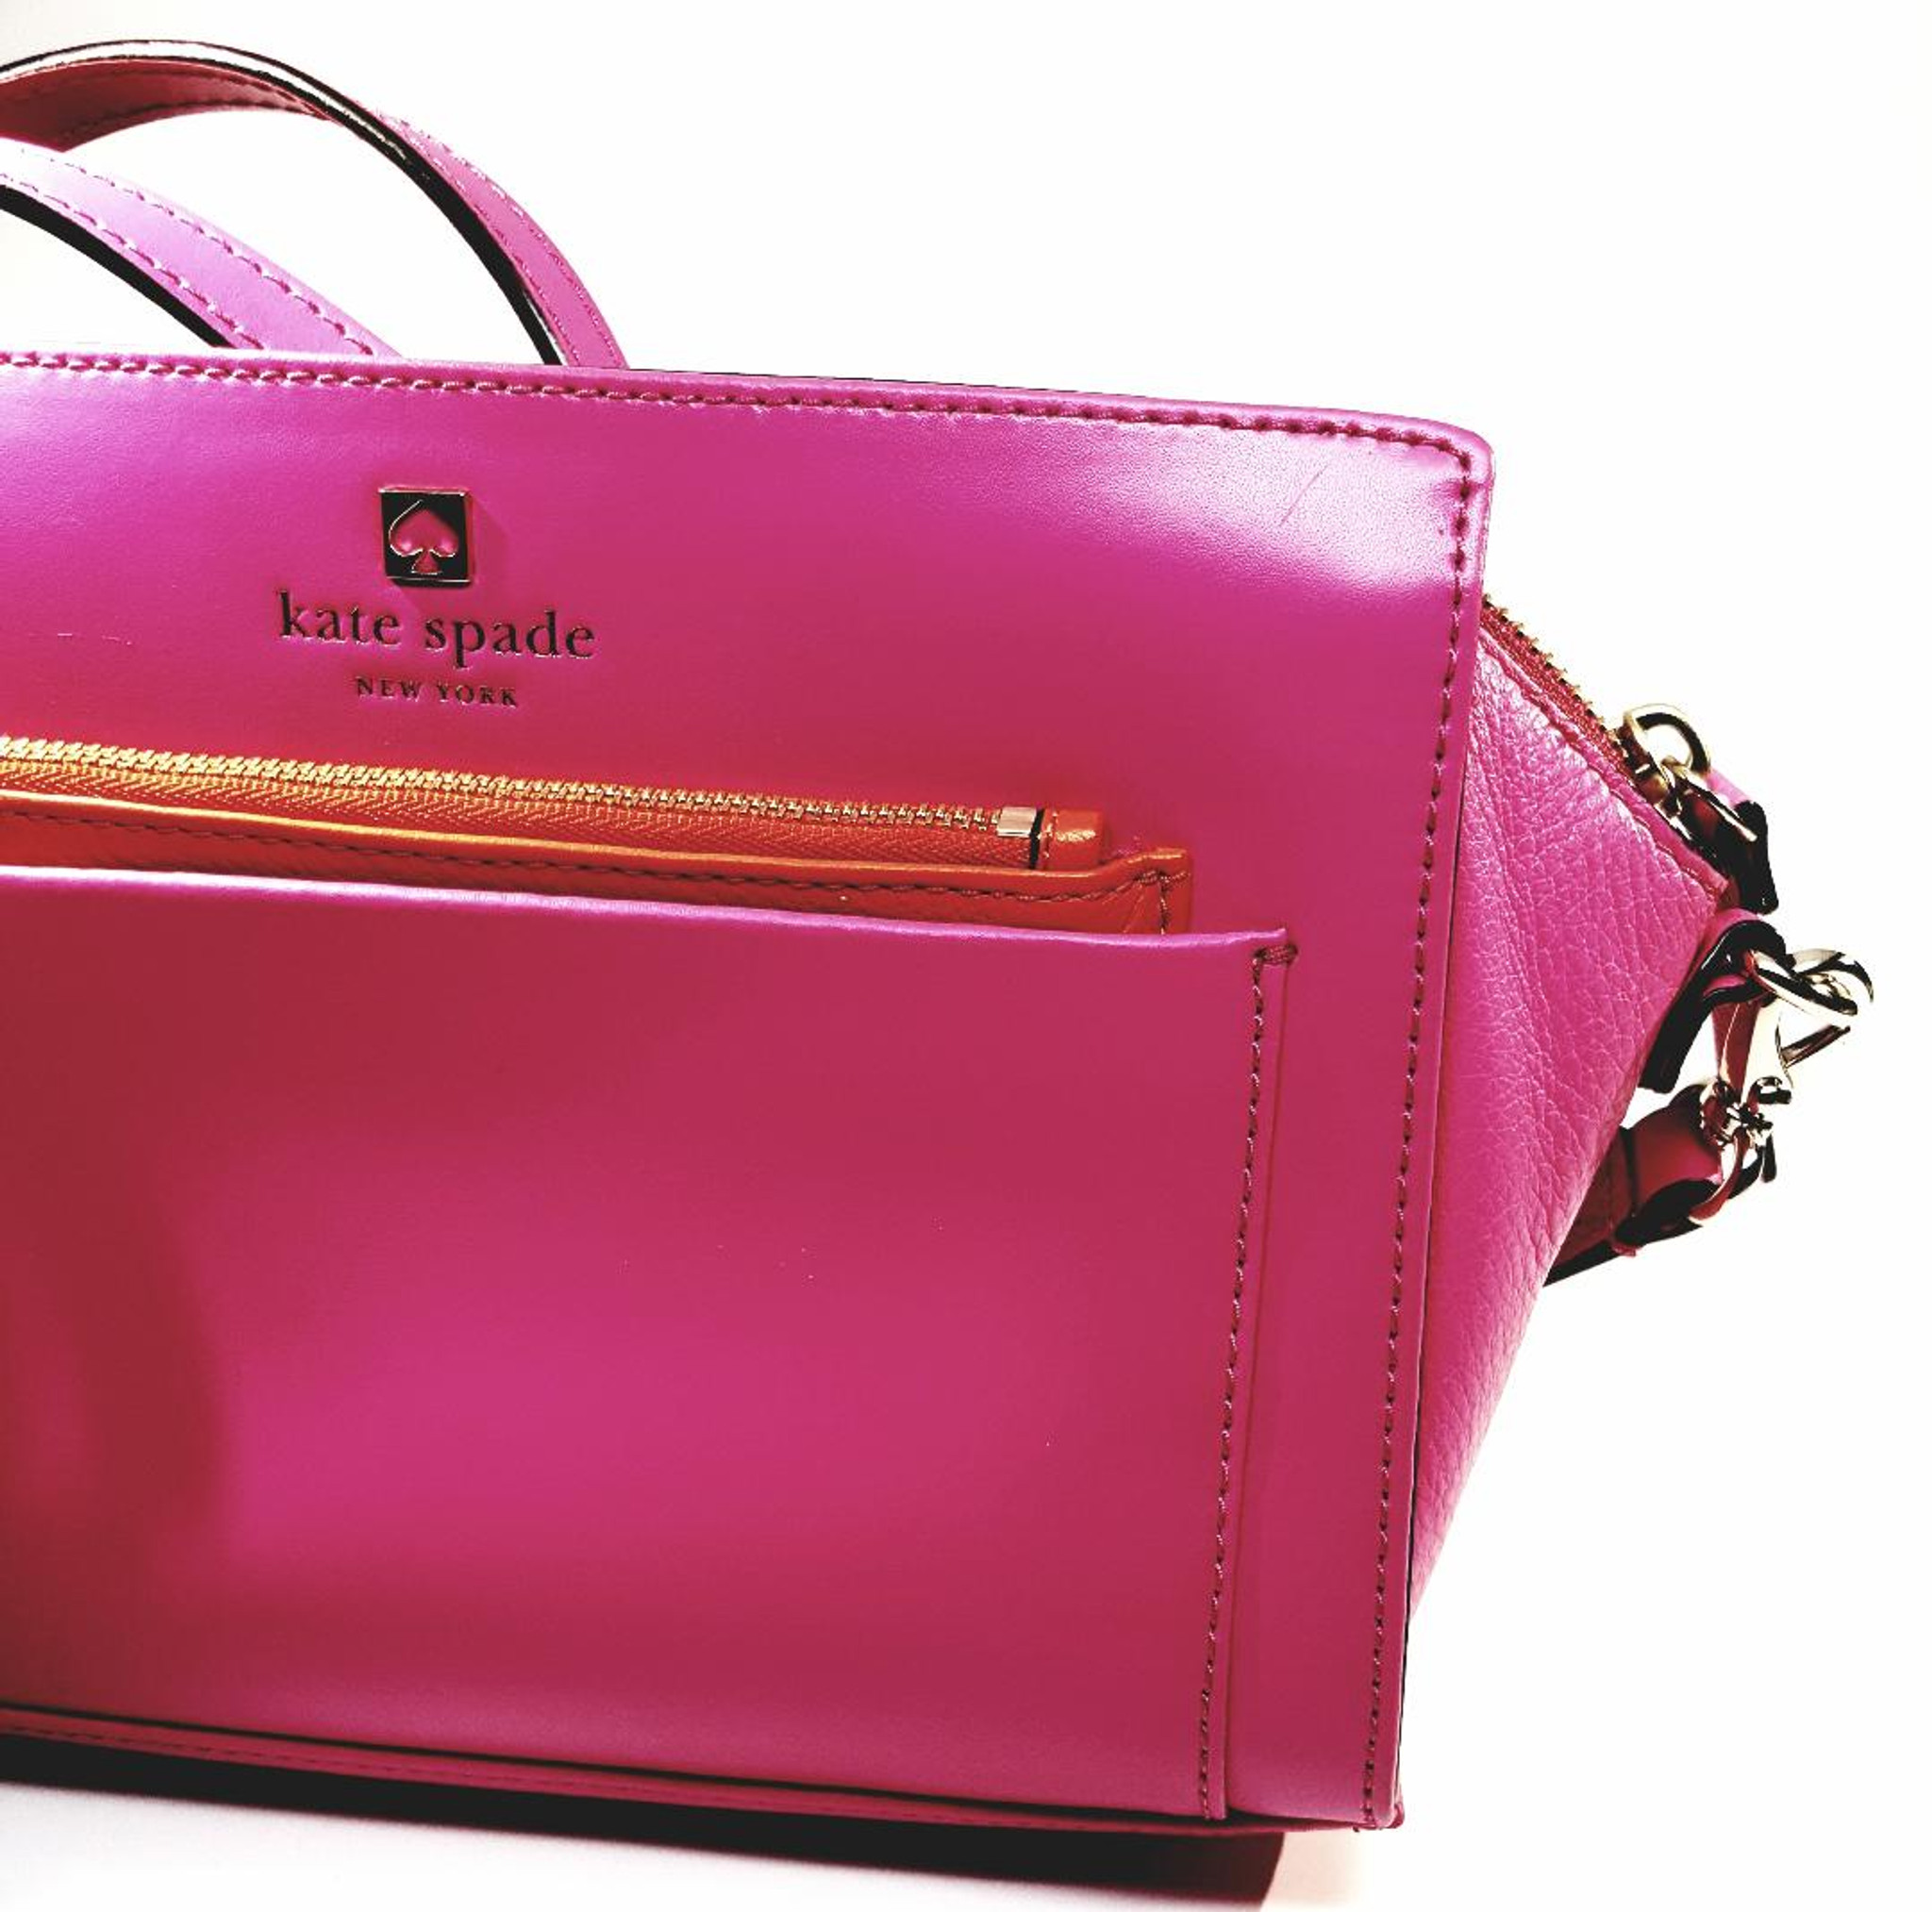 Kate Spade New York Handbags in Handbags | Red - Walmart.com